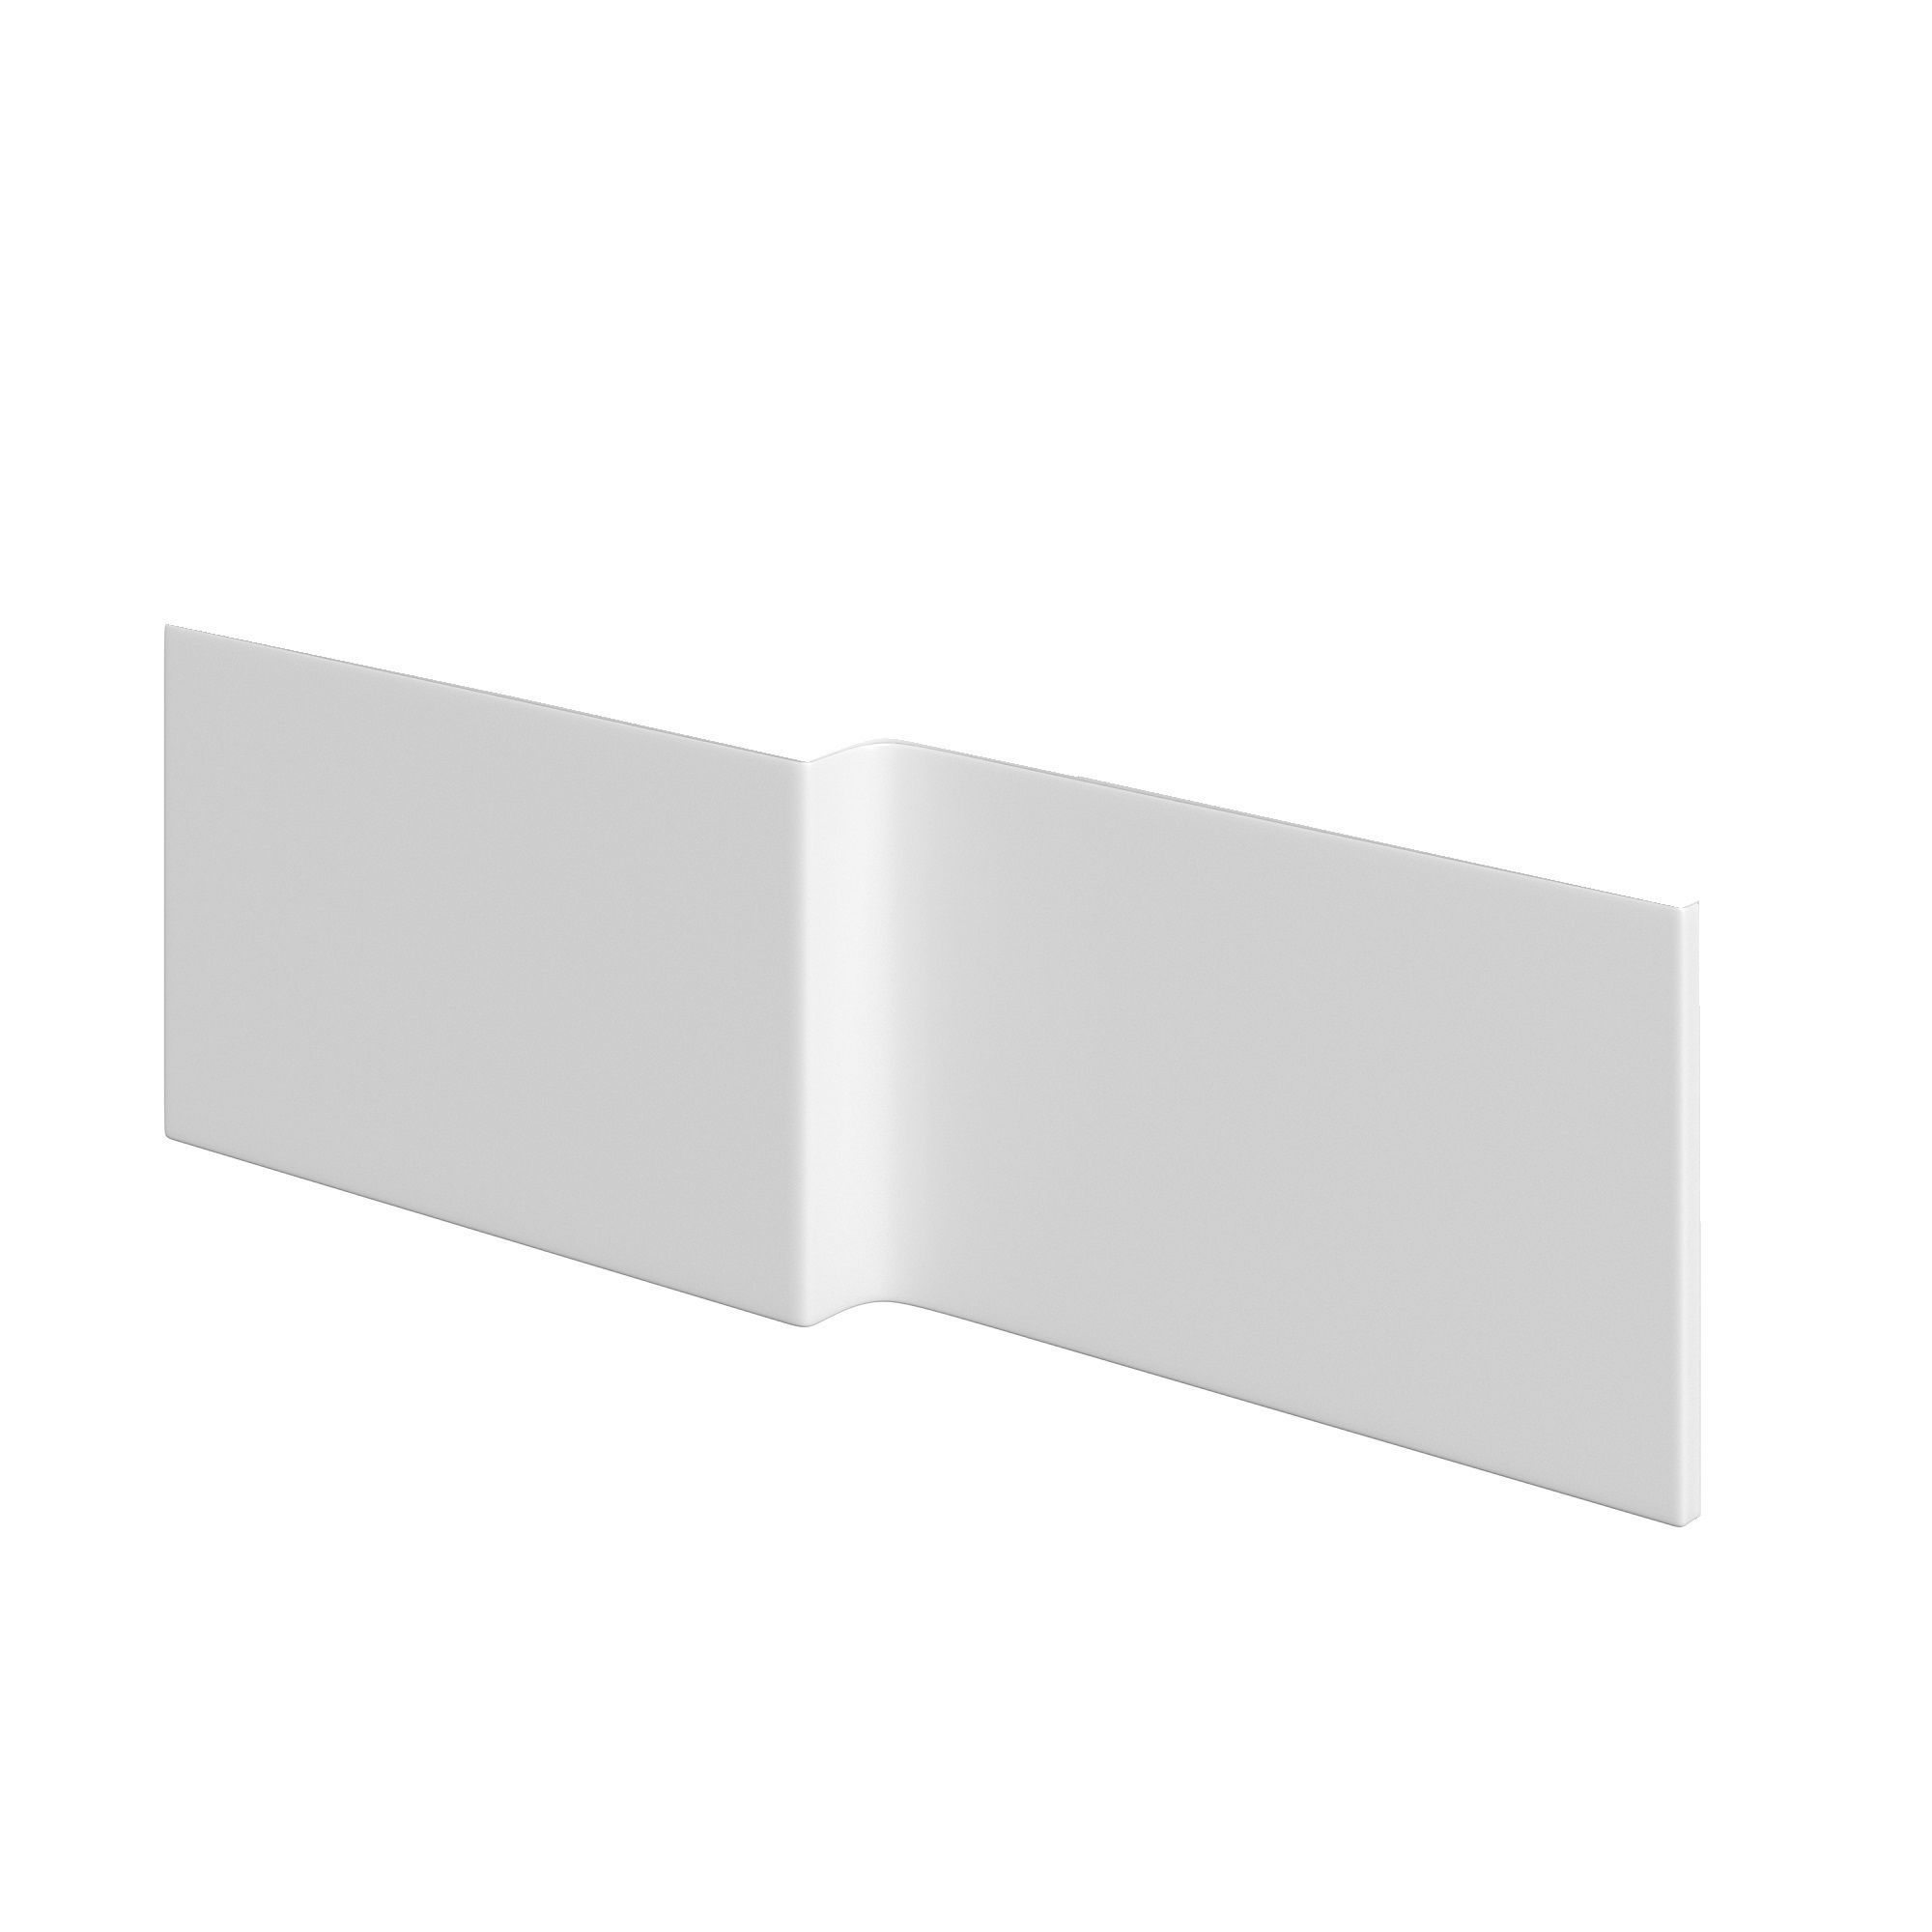 Cooke & Lewis Solarna White L-shaped Left-handed Shower Bath, panel & screen set (L)1700mm